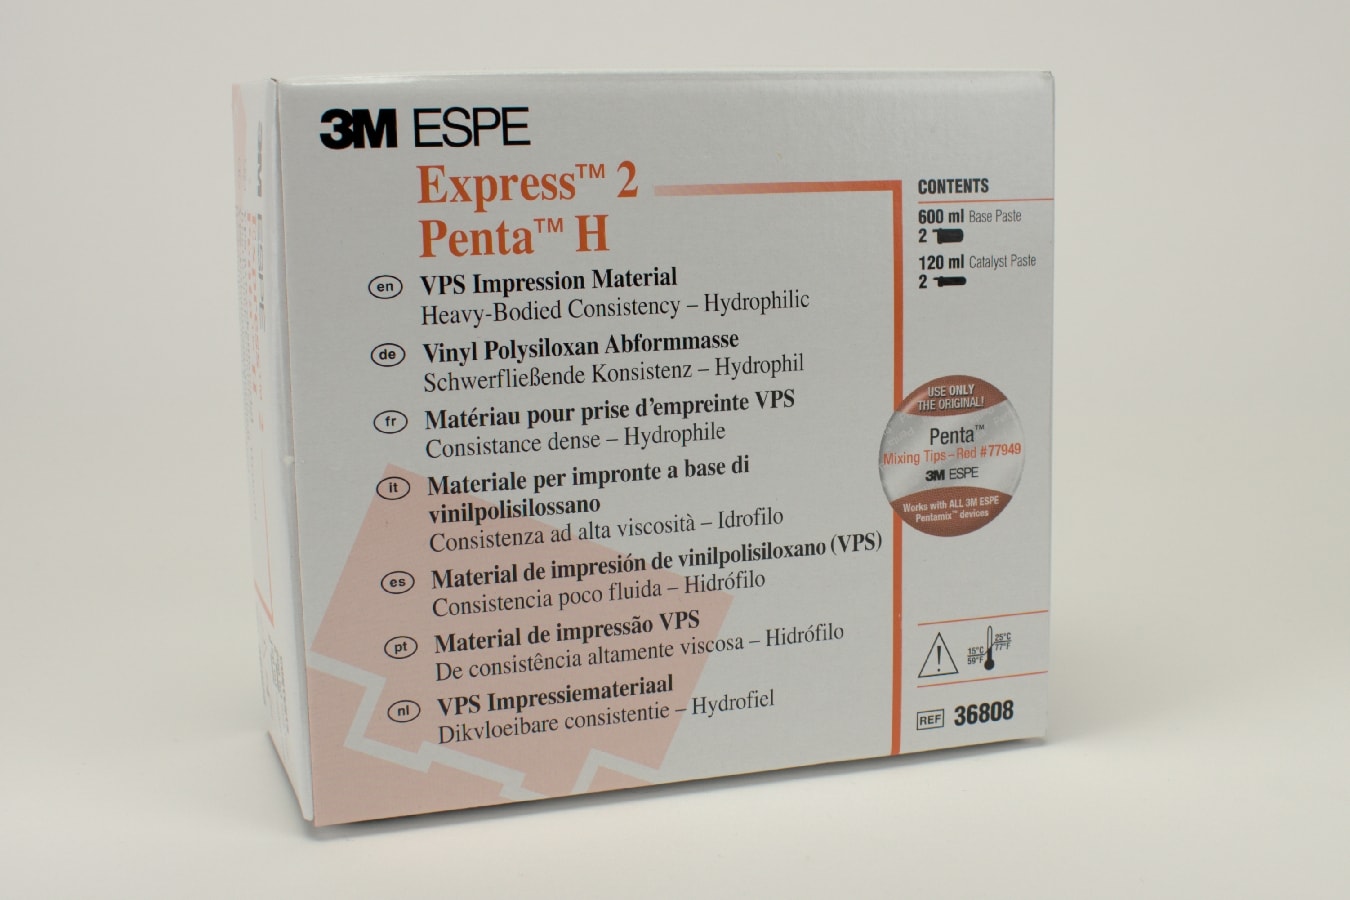 Express 2 Penta Heavy 2x360ml